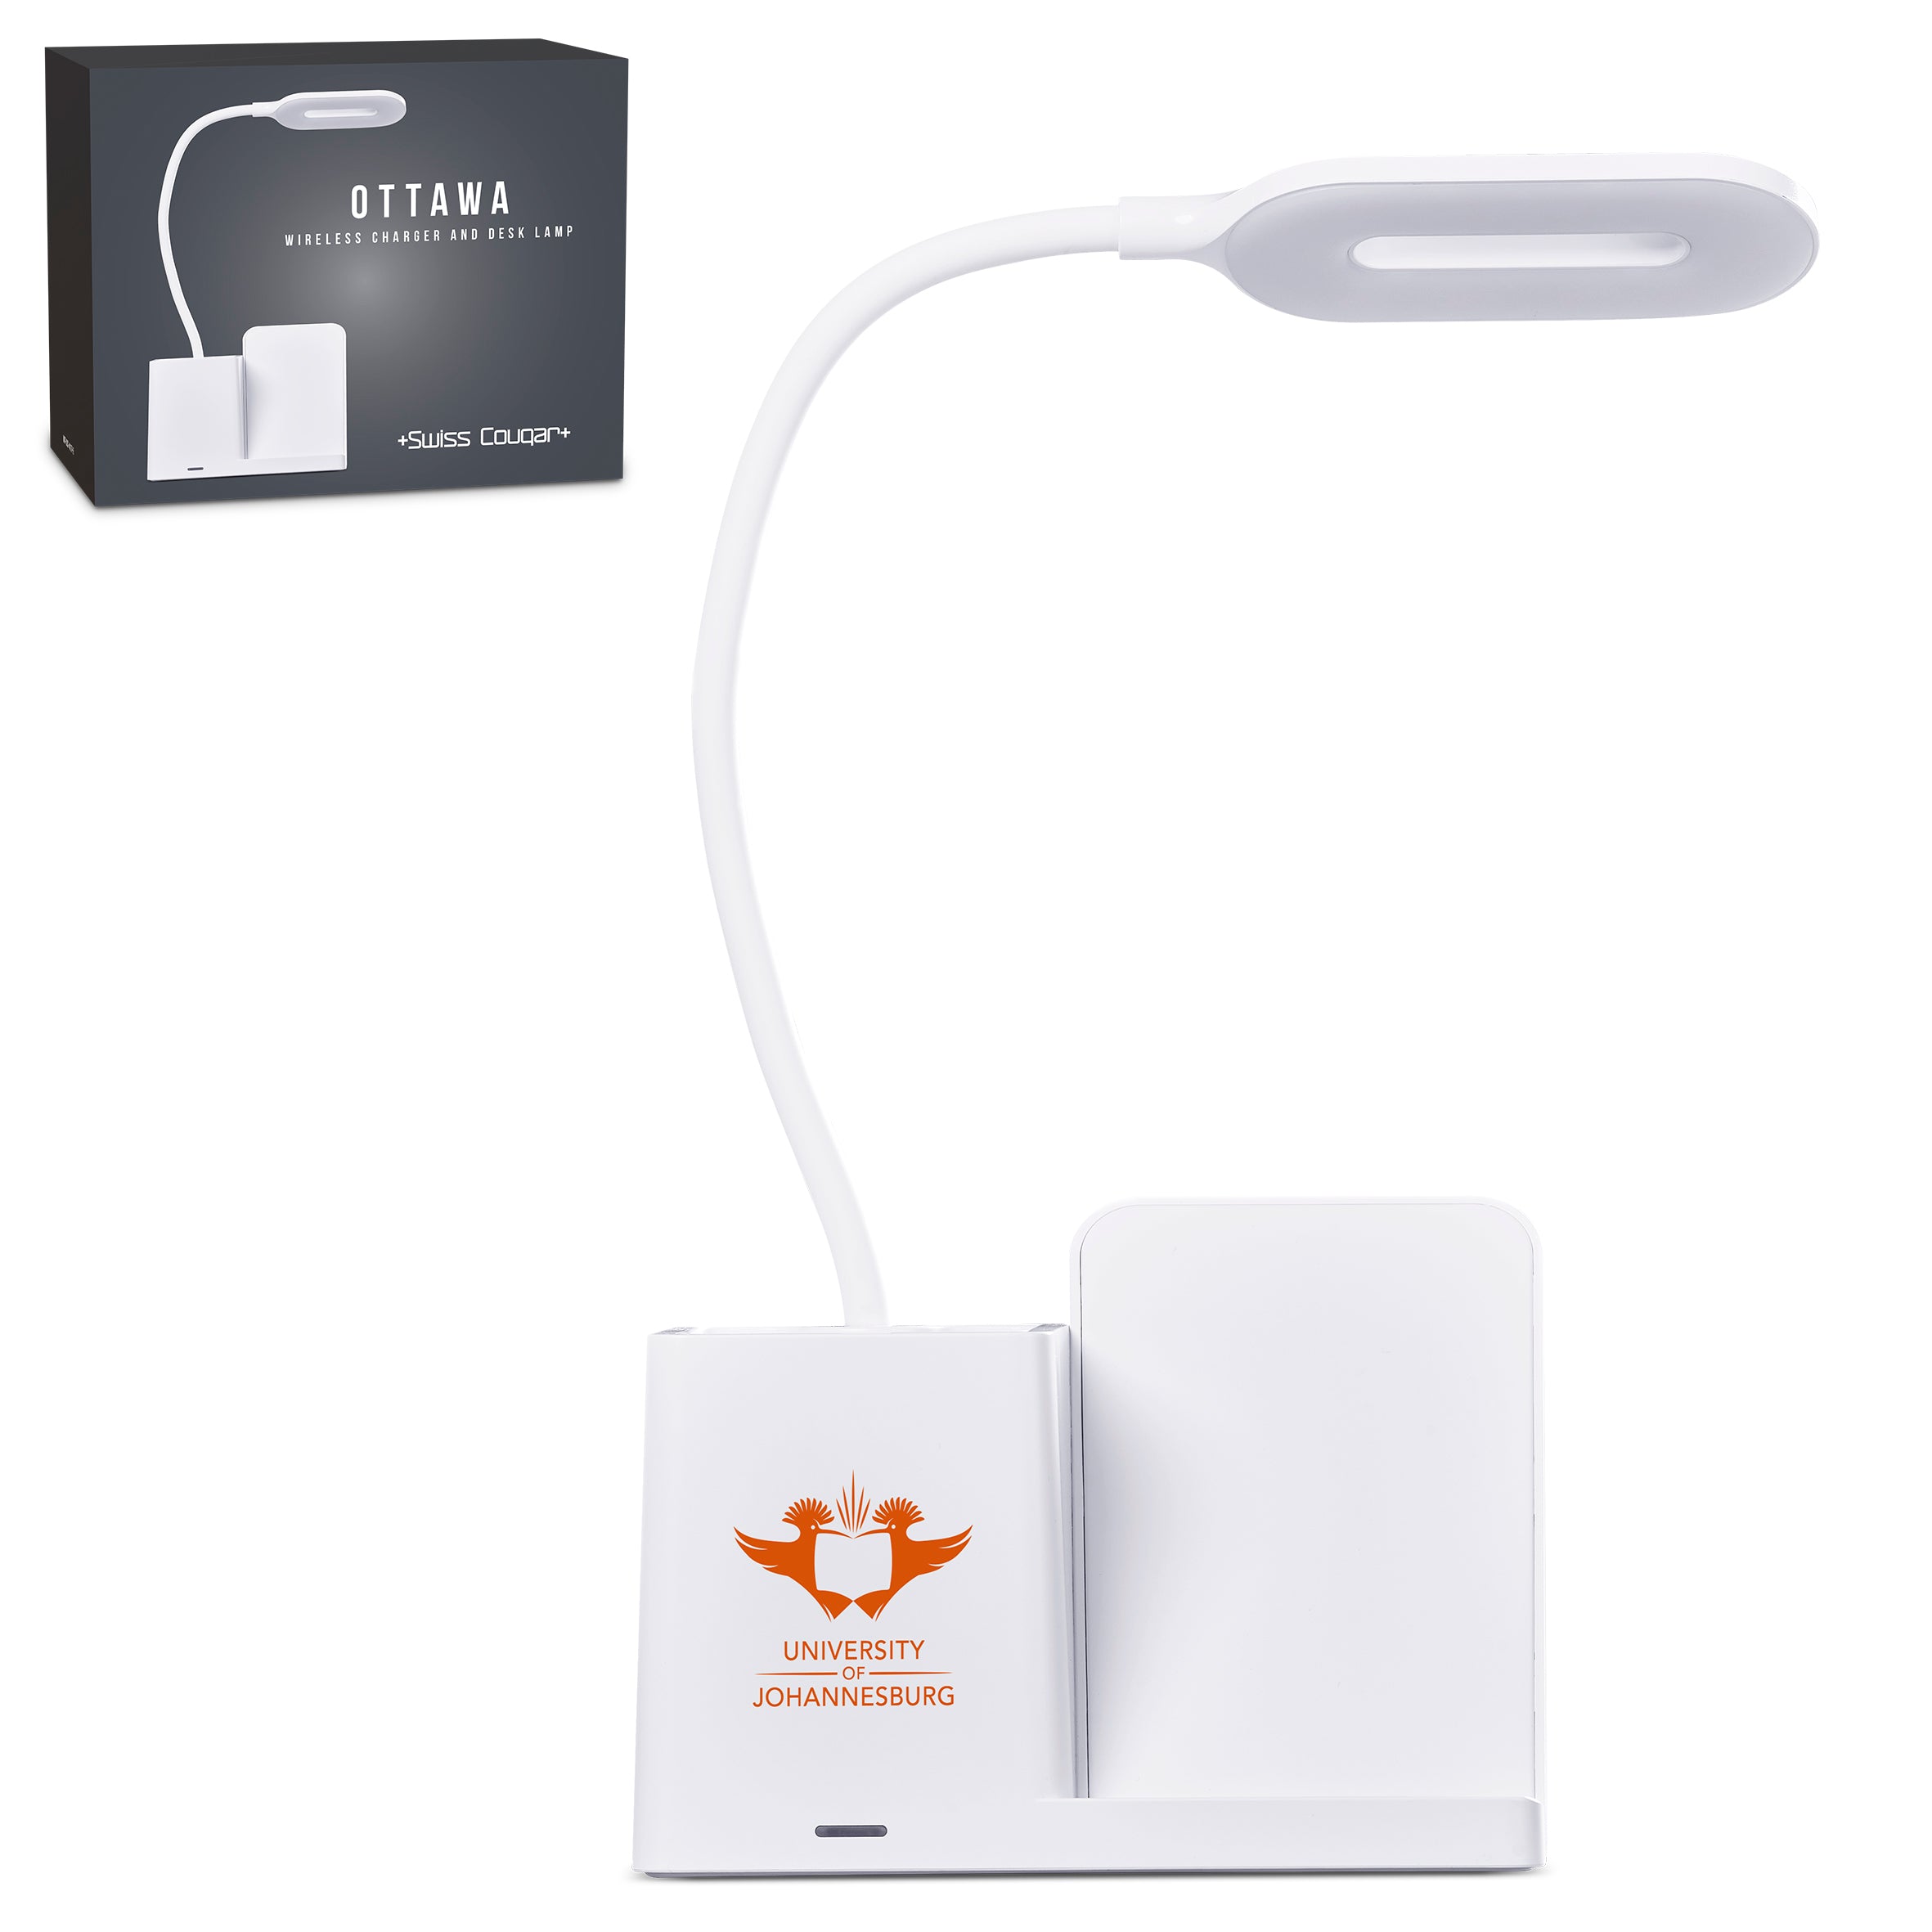 Ottawa Wireless Charger and Desk Lamp